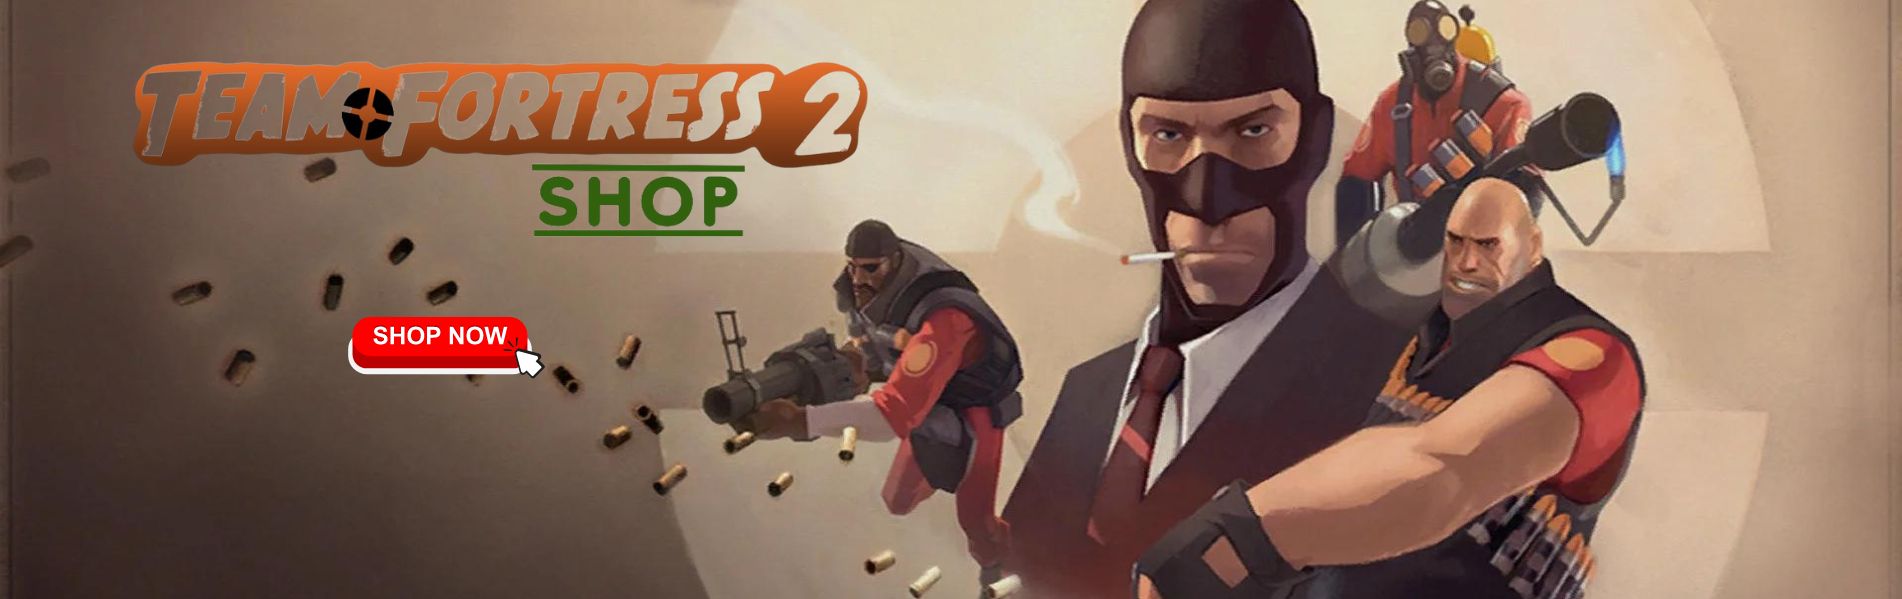 Team Fortress 2 Shop Banner - Team Fortress 2 Shop